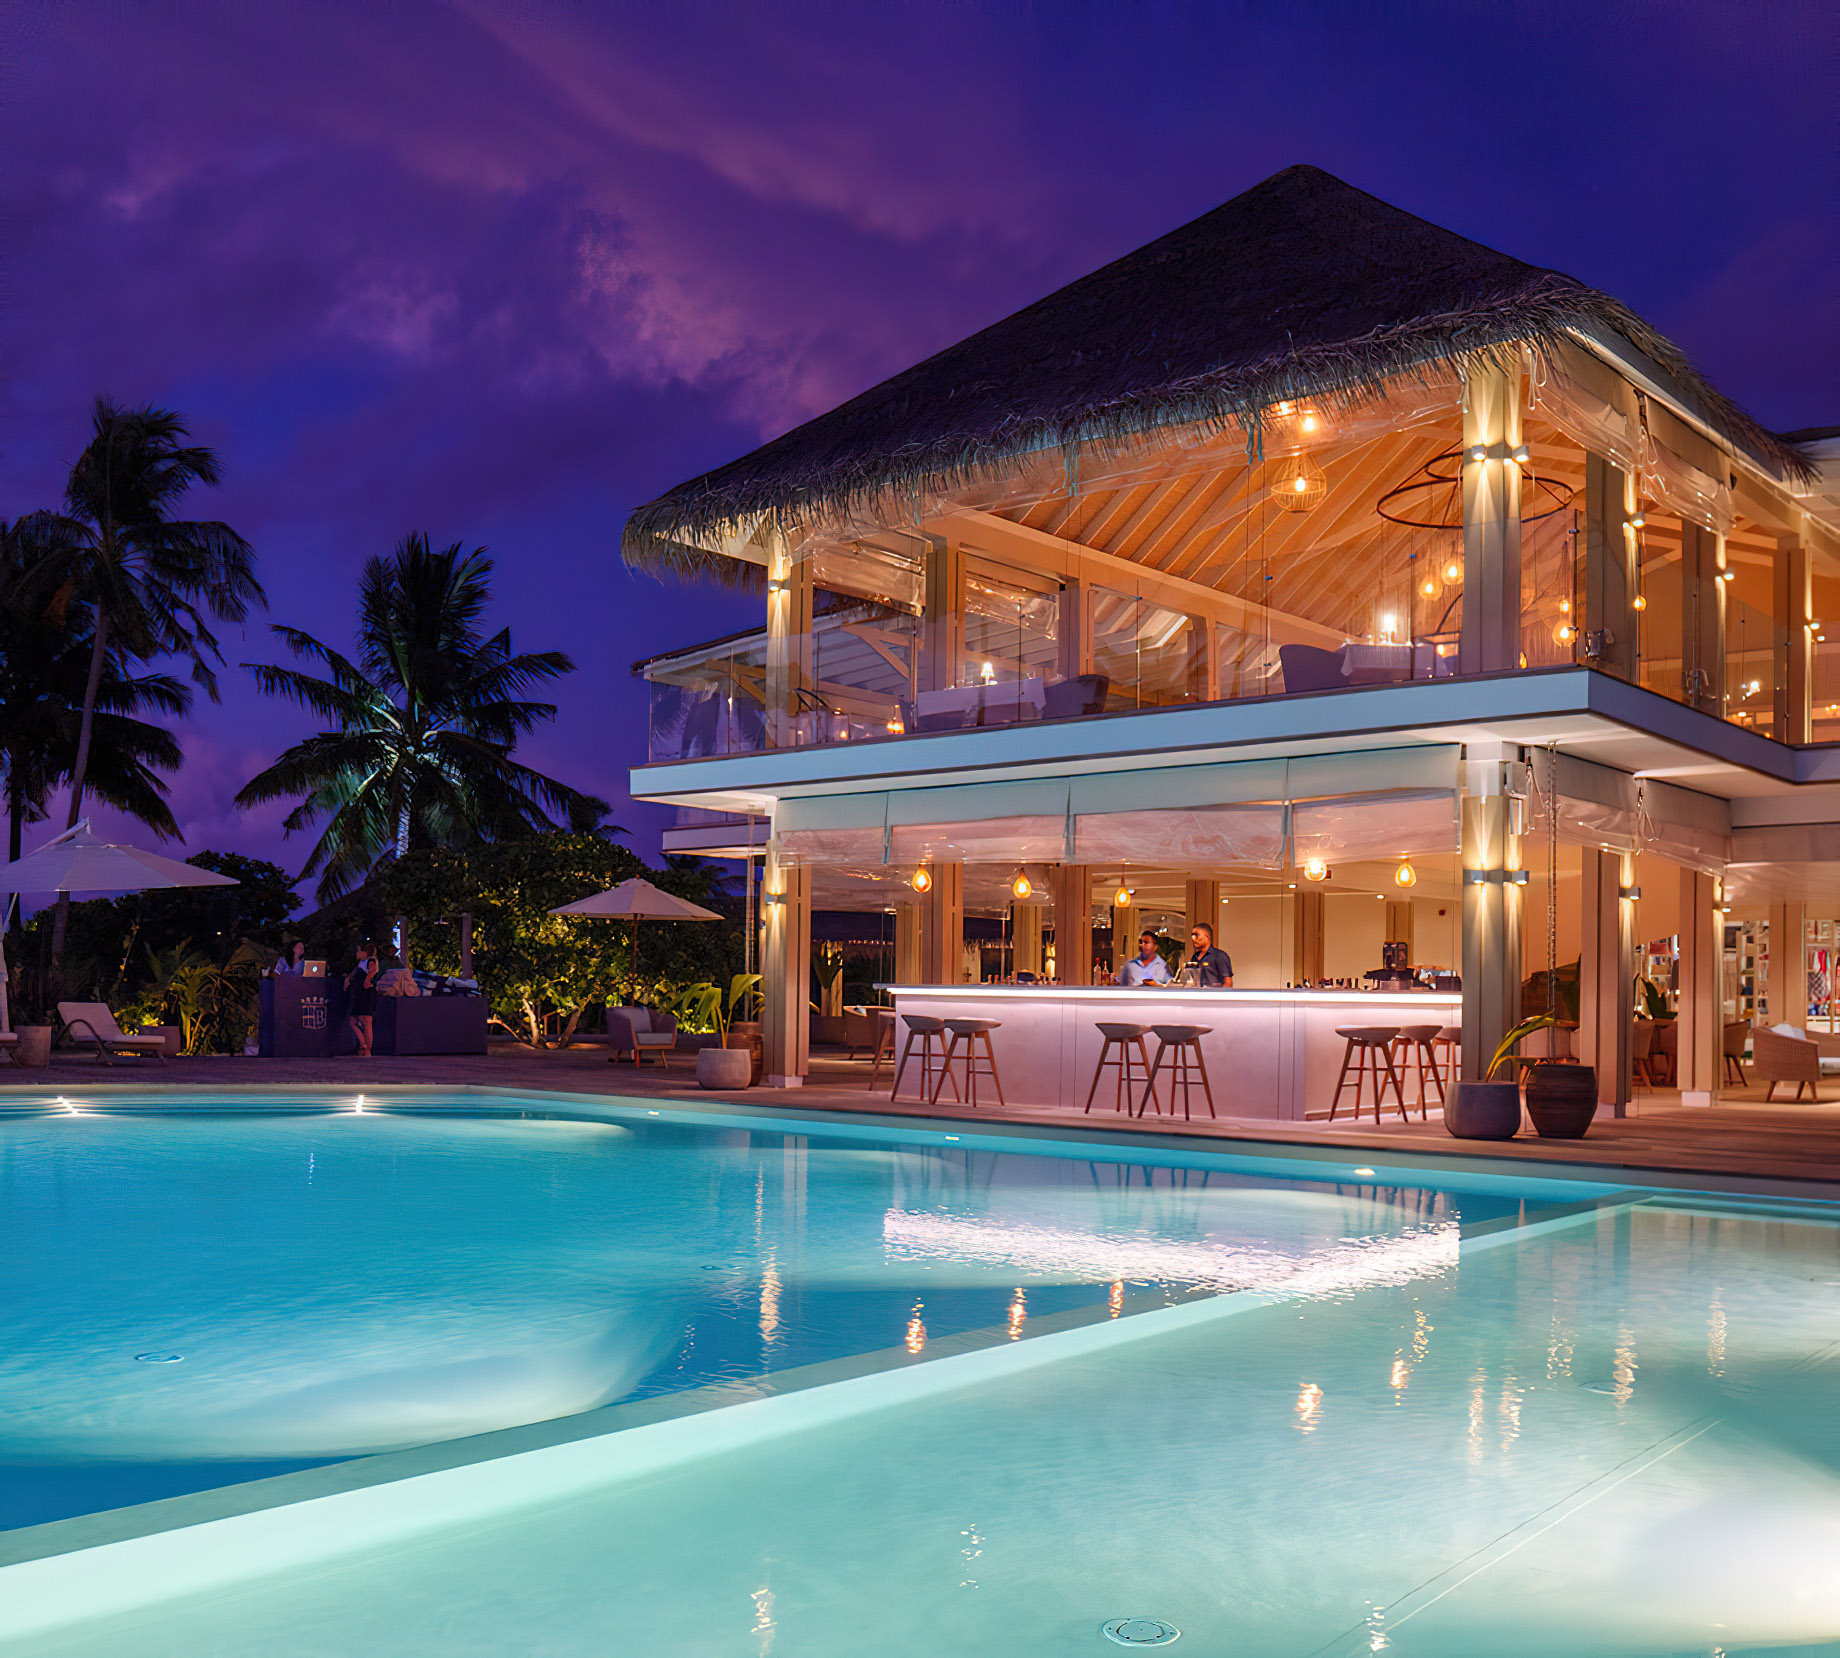 Baglioni Resort Maldives – Maagau Island, Rinbudhoo, Maldives – Gusto Restaurant and Pool Bar Night View